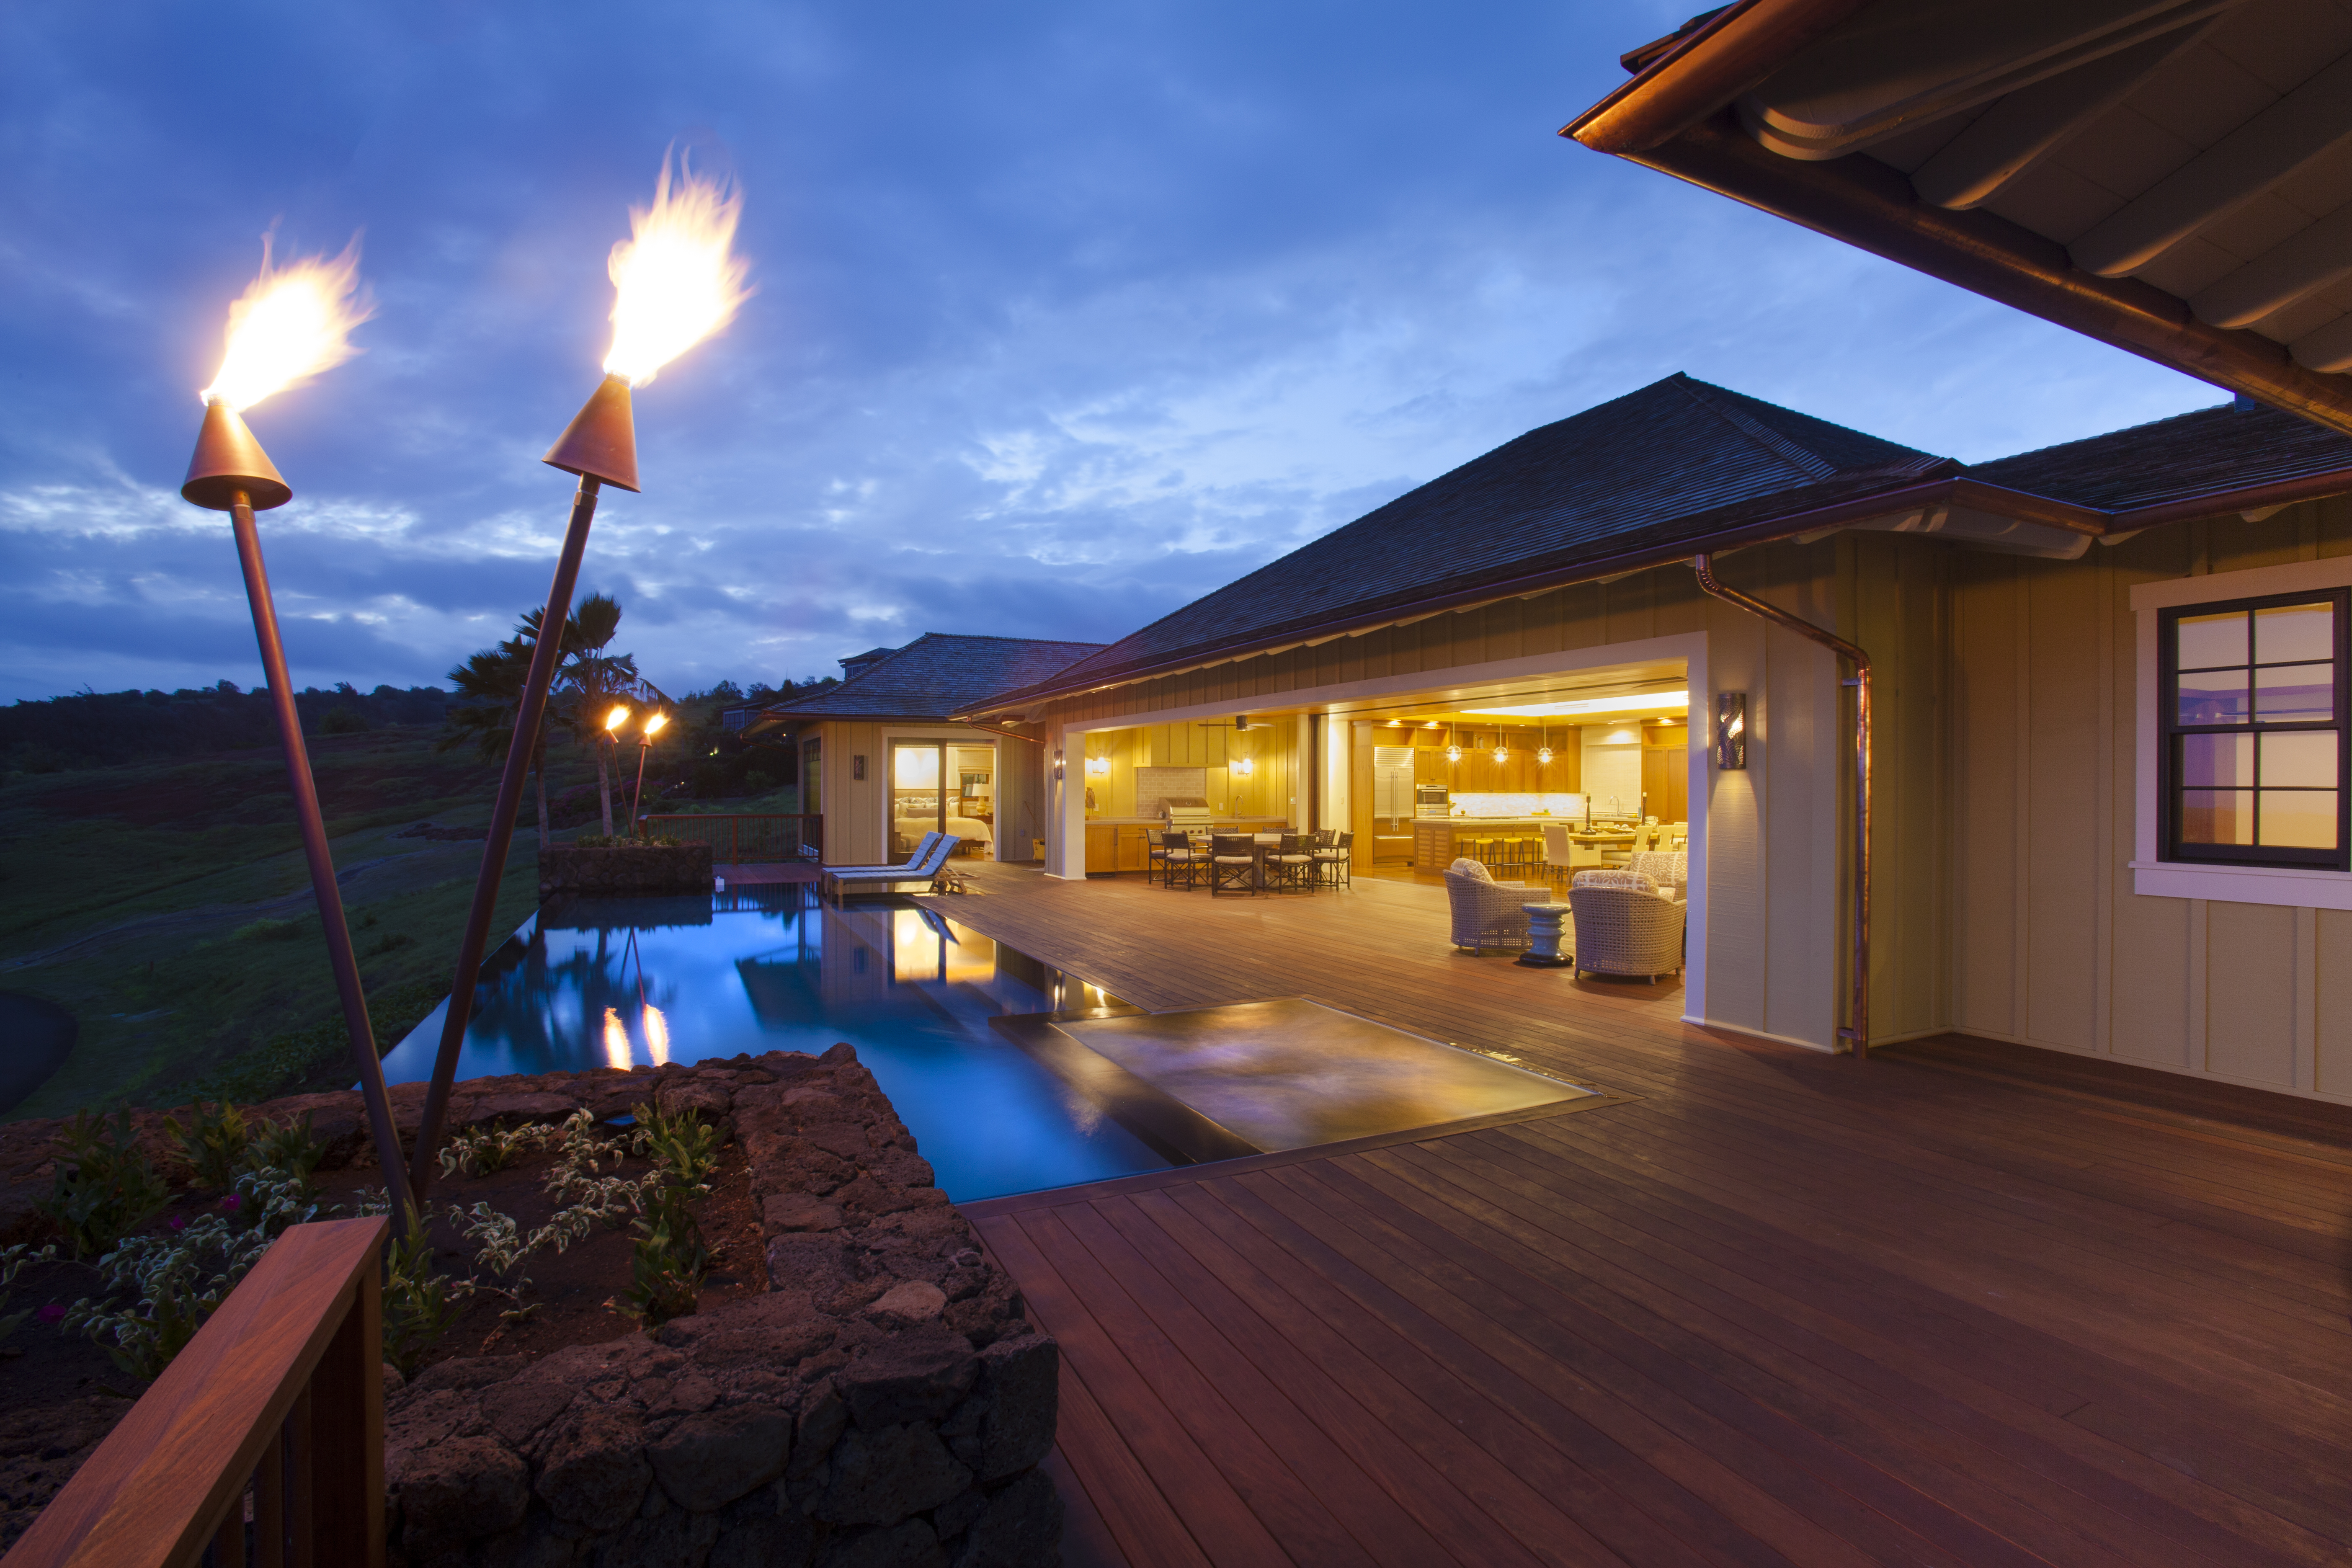 How to move to Kauai | Best Islands to live on Hawaii | Go big or go home